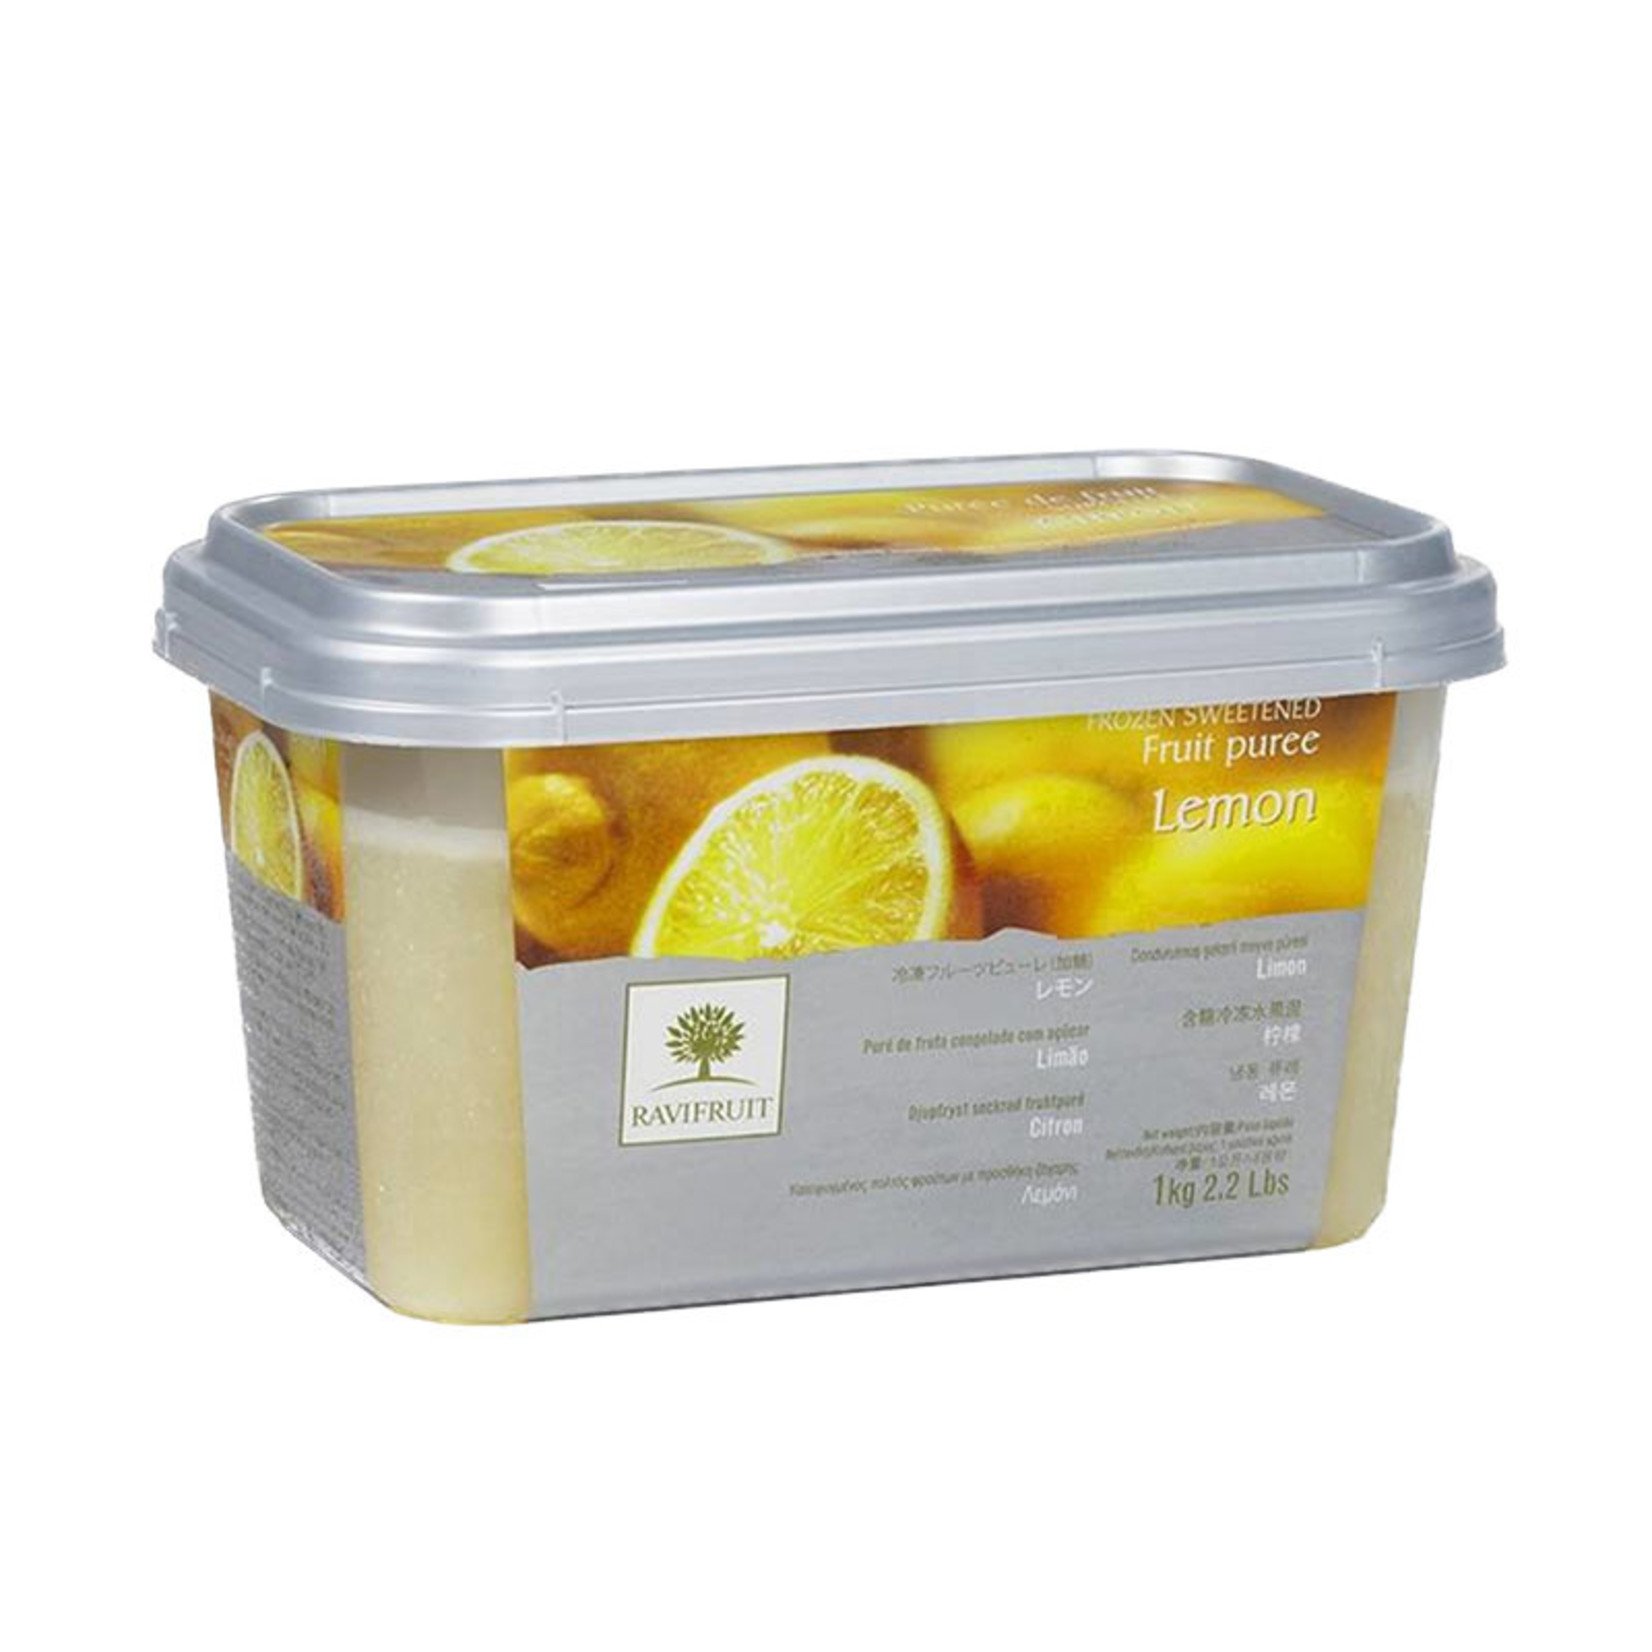 Ravifruit Ravifruit - Lemon Puree - 2.2 lb